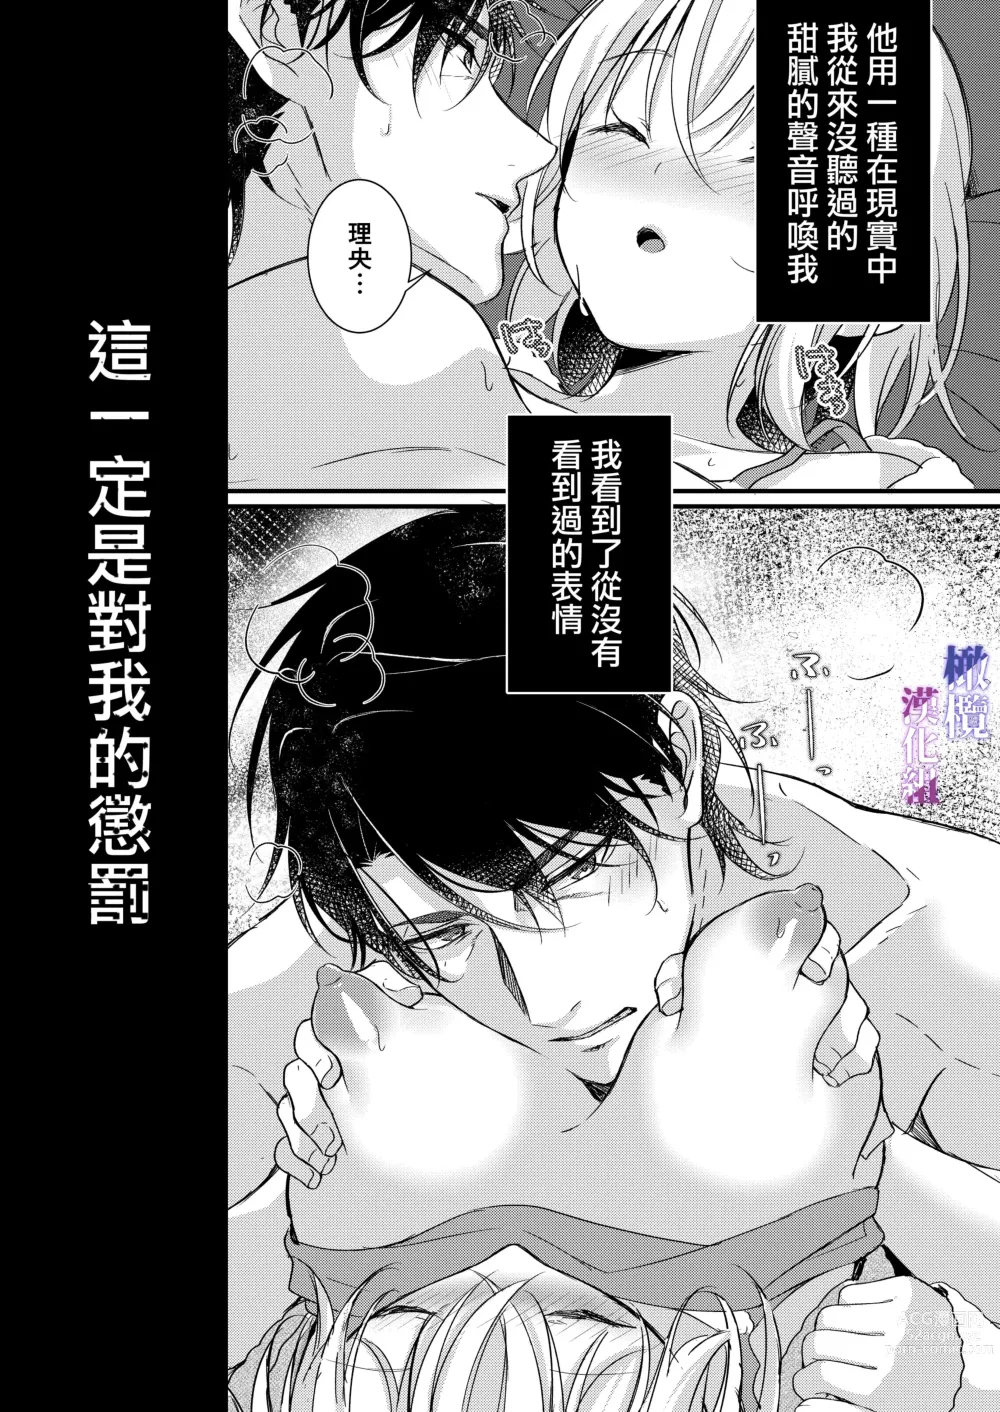 Page 4 of doujinshi 梦见了与叔叔淫乱的梦